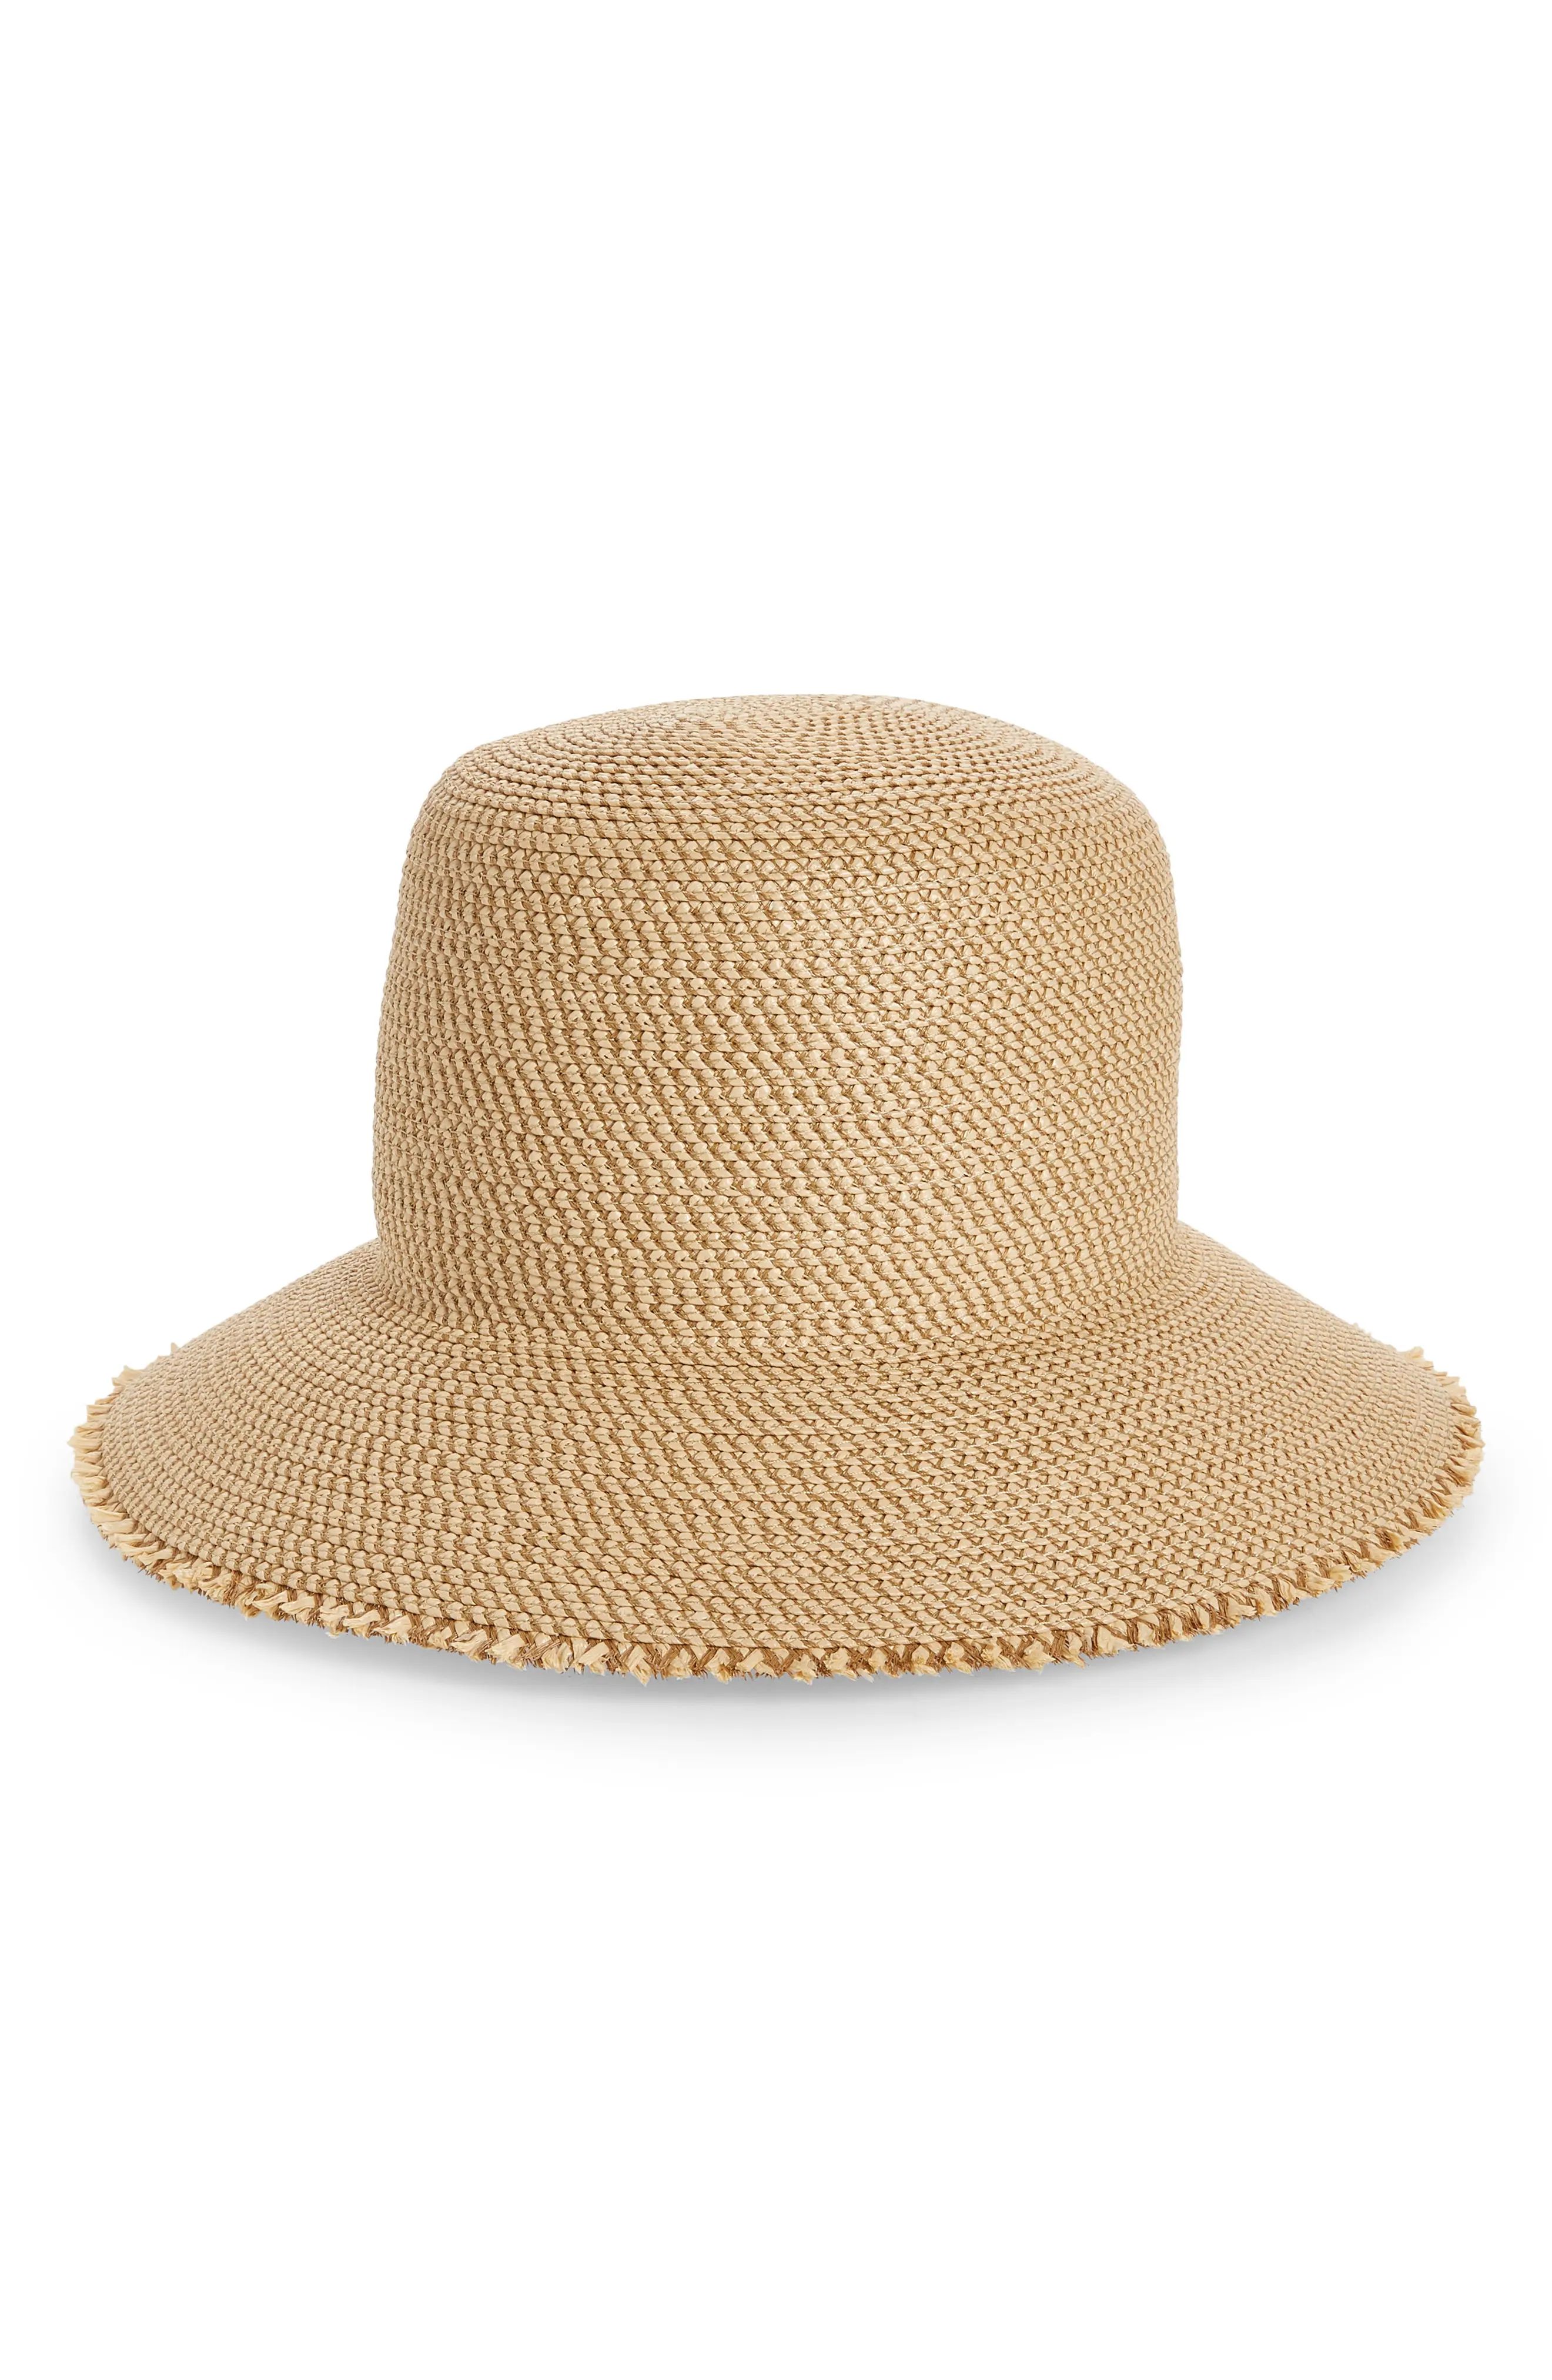 Eric Javits Squishee(R) Straw Bucket Hat in Peanut at Nordstrom | Nordstrom